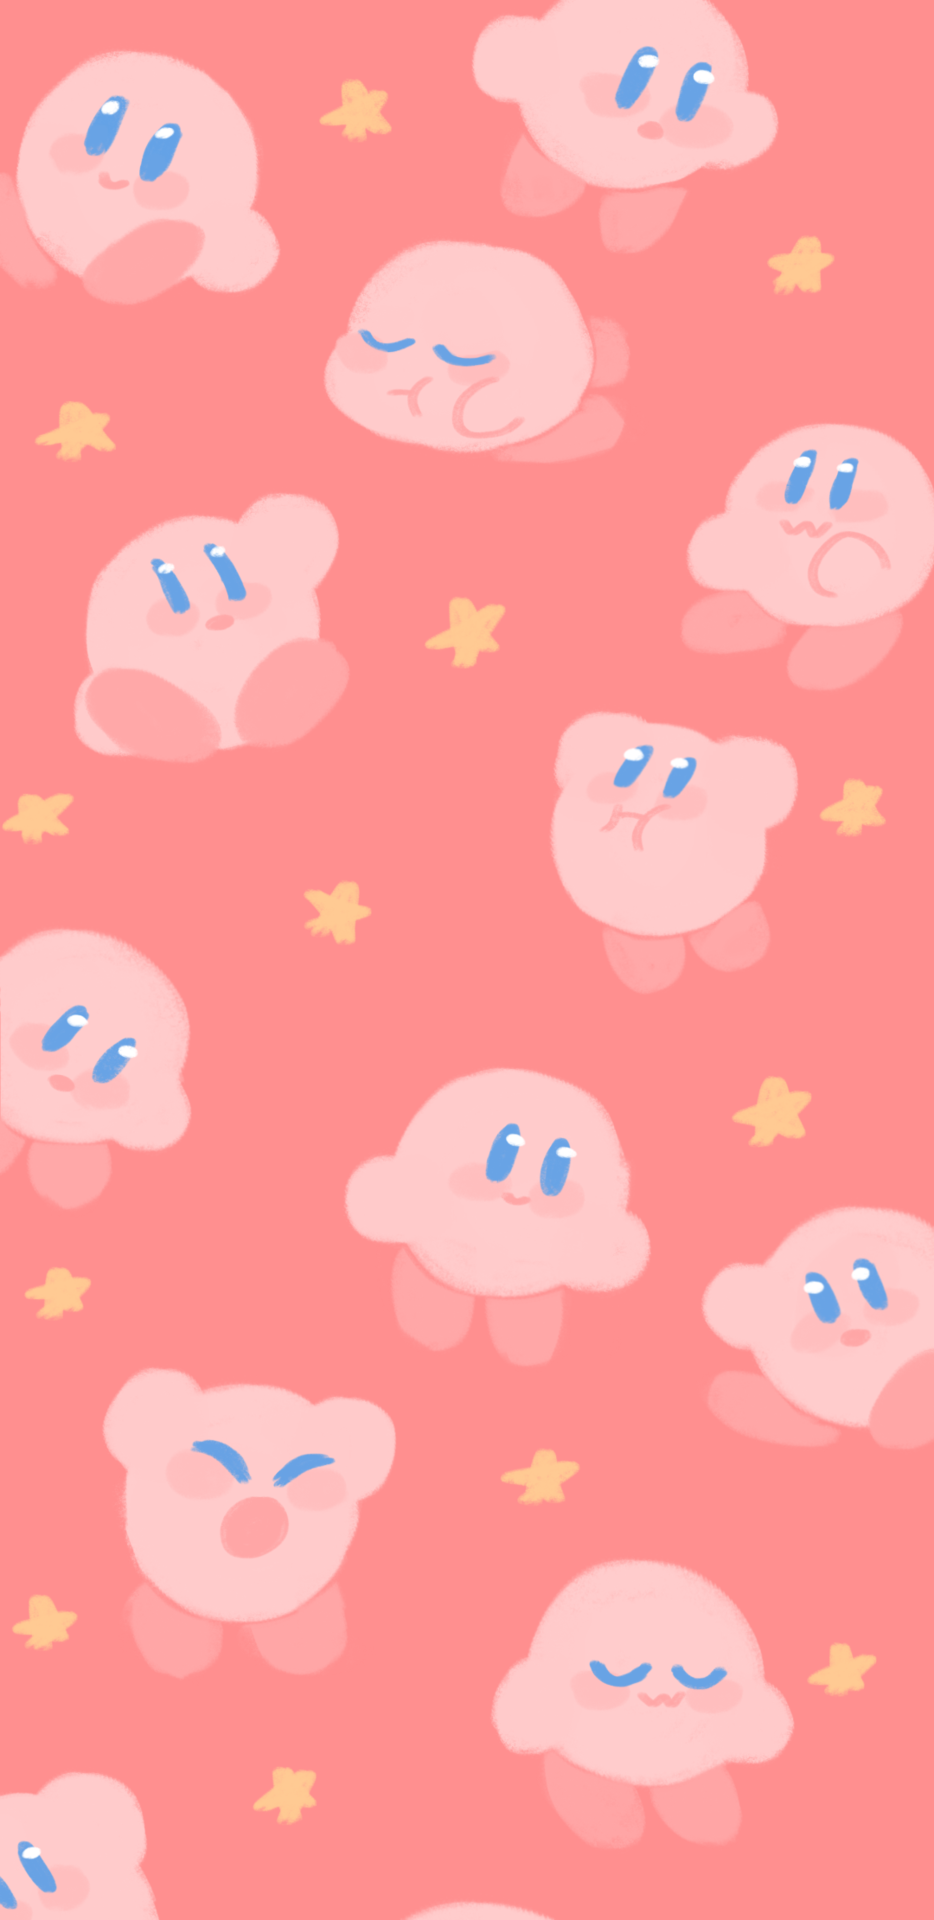 Image result for kirby wallpaper. Kirby pokemon, Kawaii wallpaper, Cute wallpaper